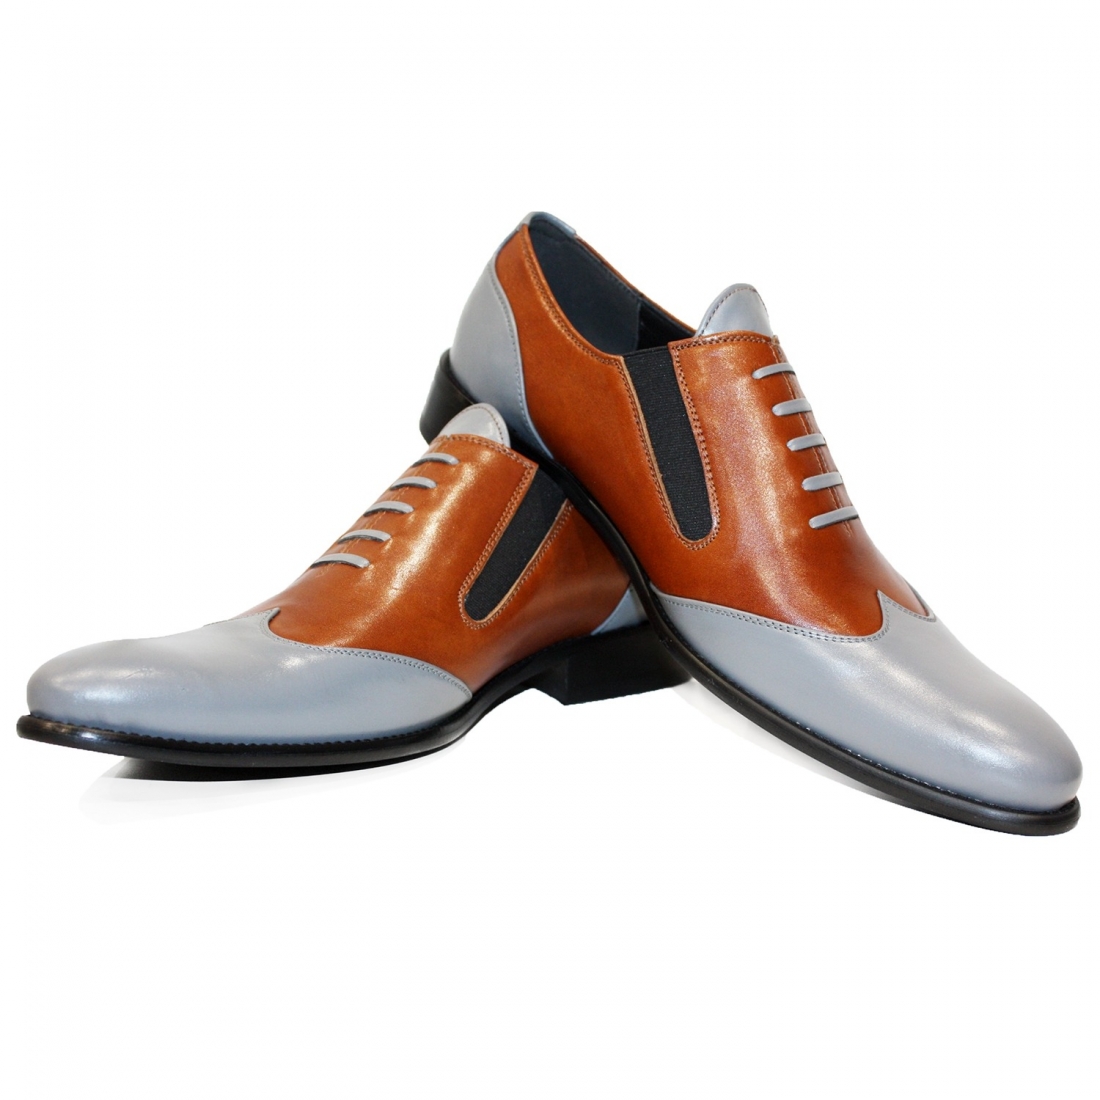 Modello Jabello - Buty Wsuwane - Handmade Colorful Italian Leather Shoes